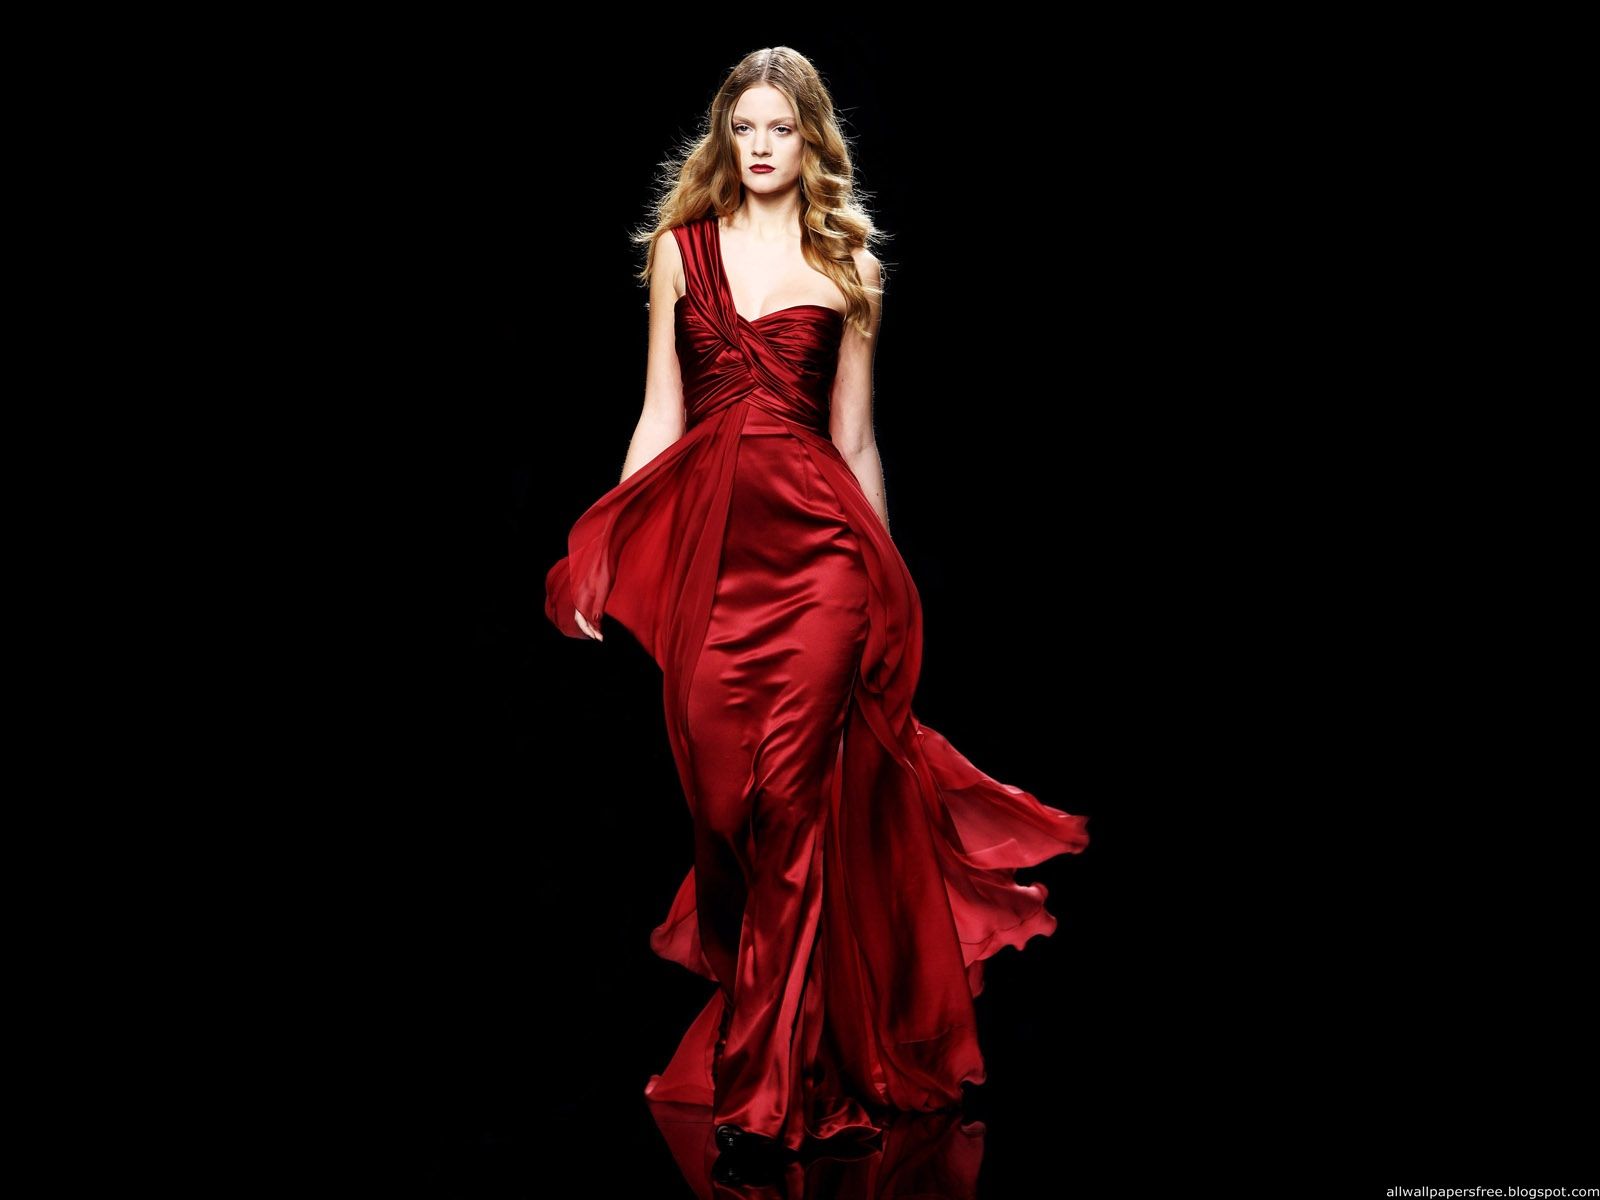 Beautiful Girl Wallpaper 18, Nice Wallpaper. Women's evening dresses, Red evening dress, Stylish party dresses